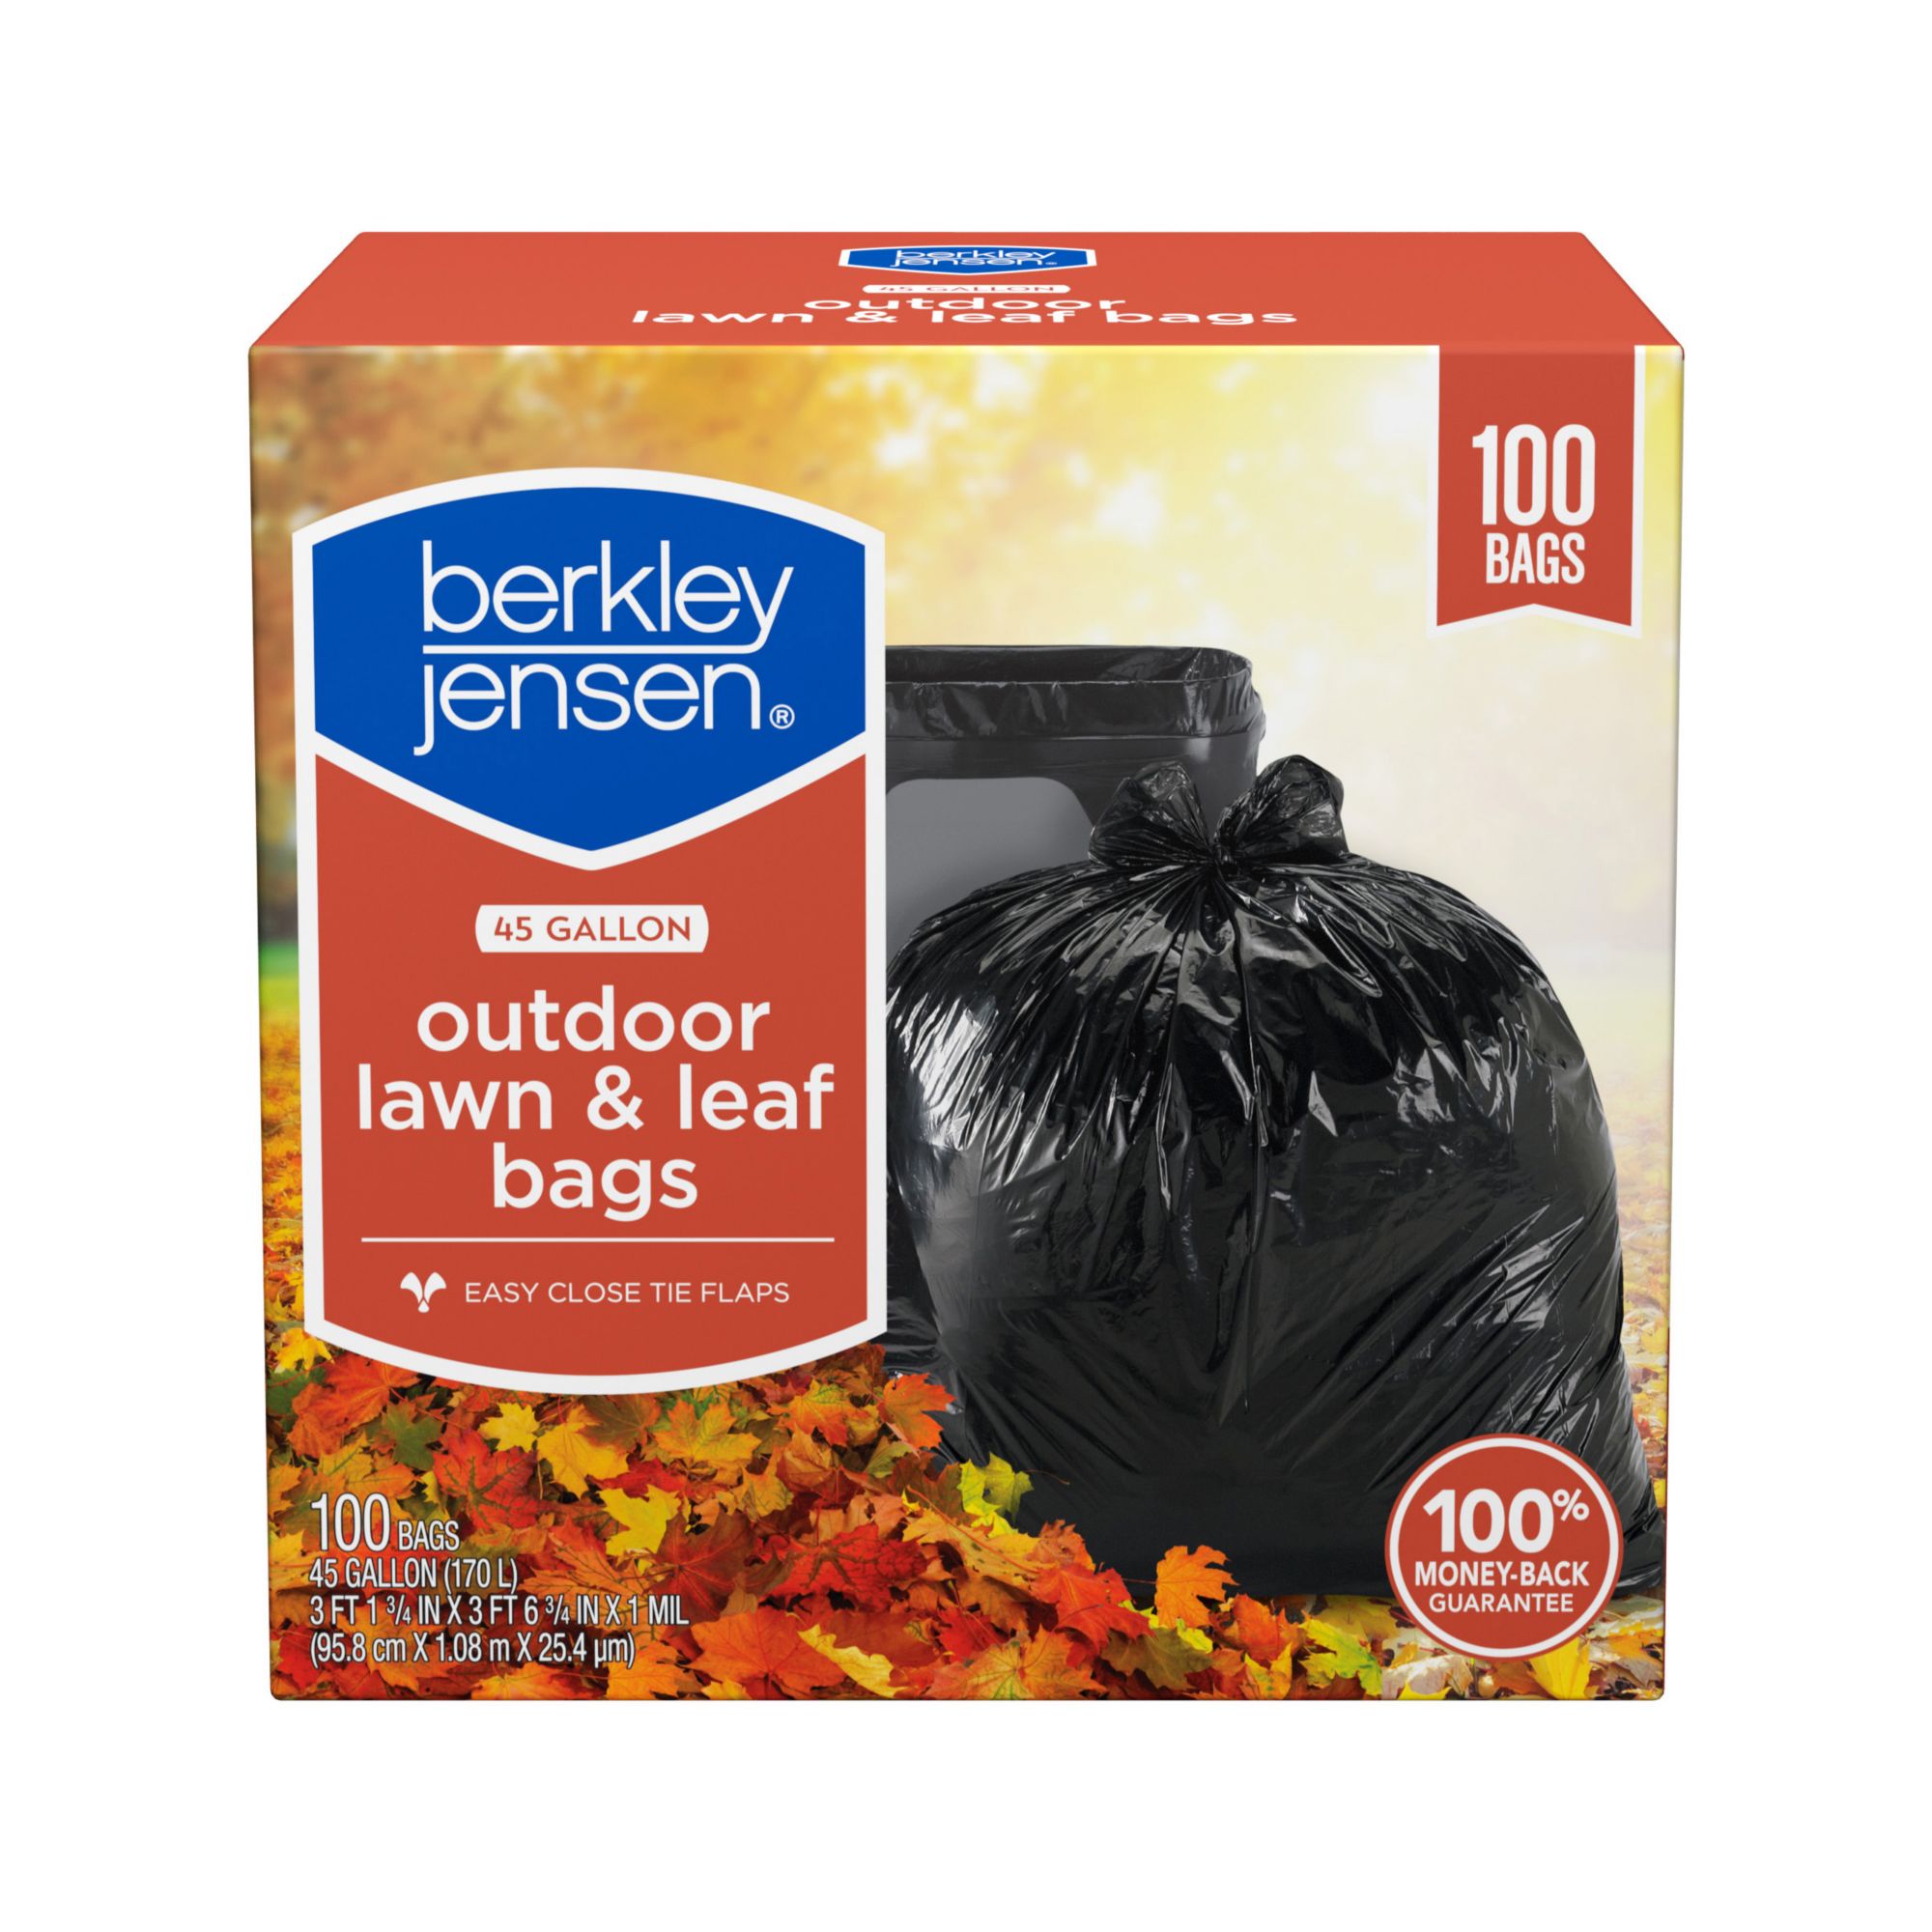 Berkley Jensen Outdoor Lawn and Leaf Bags, 100 ct./45 gal. 1mL